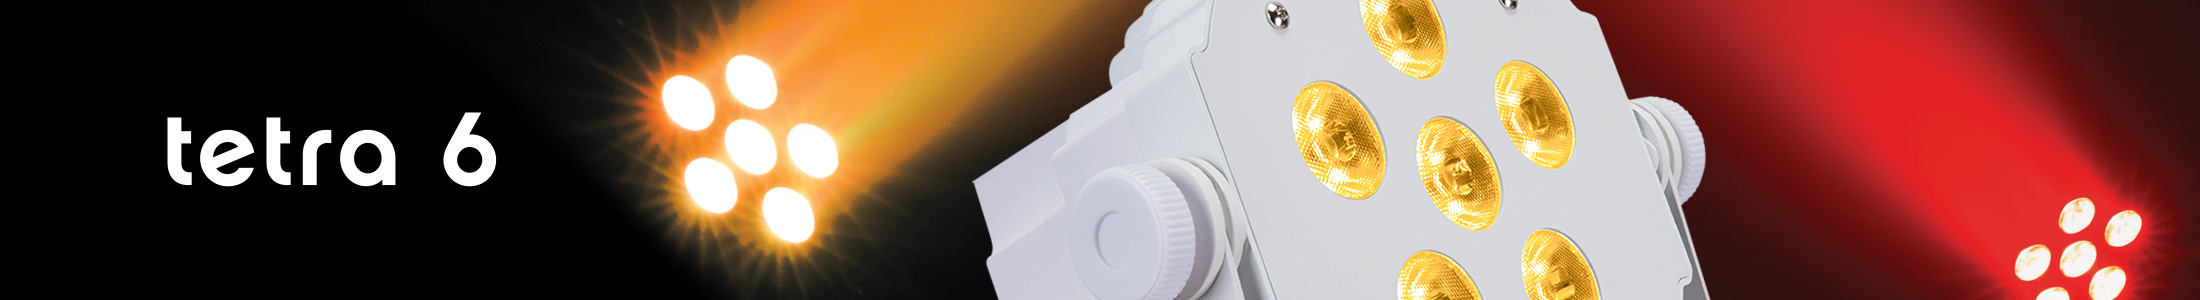 Tetra 6 White RGBA LED Compact Wash Light